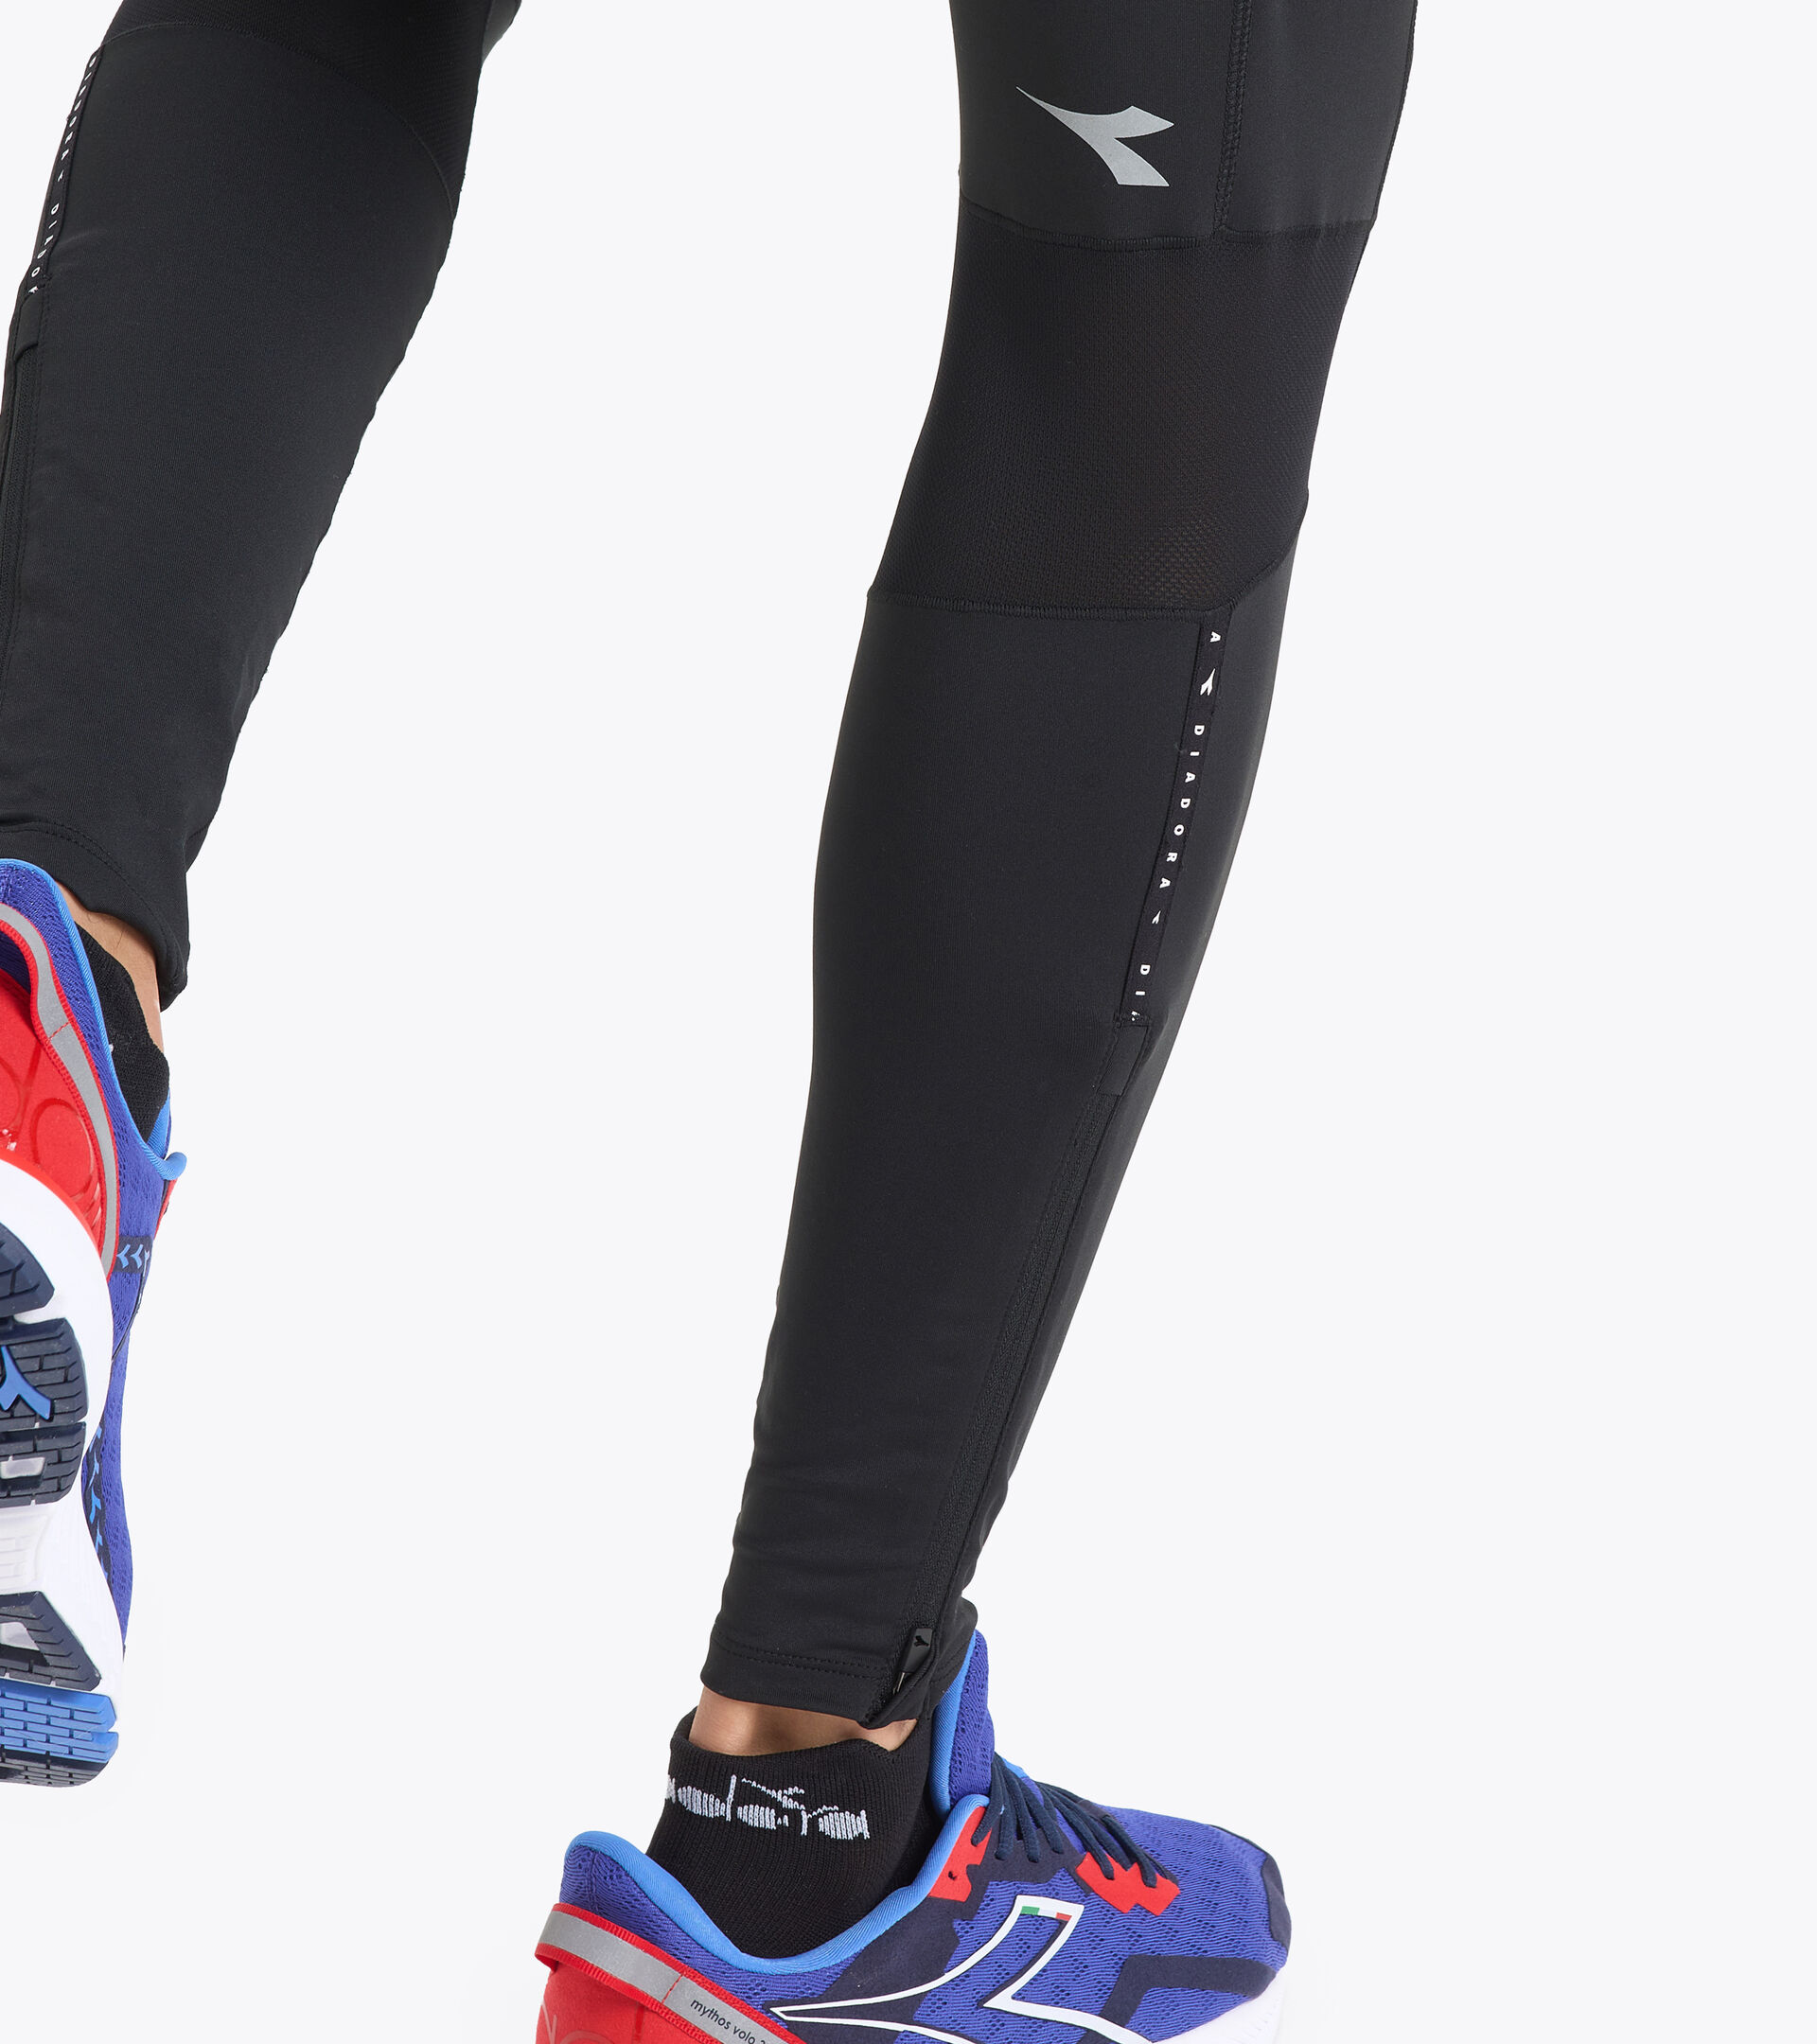 RUNNING TIGHTS Contoured running leggings - Men - Diadora Online Store FI